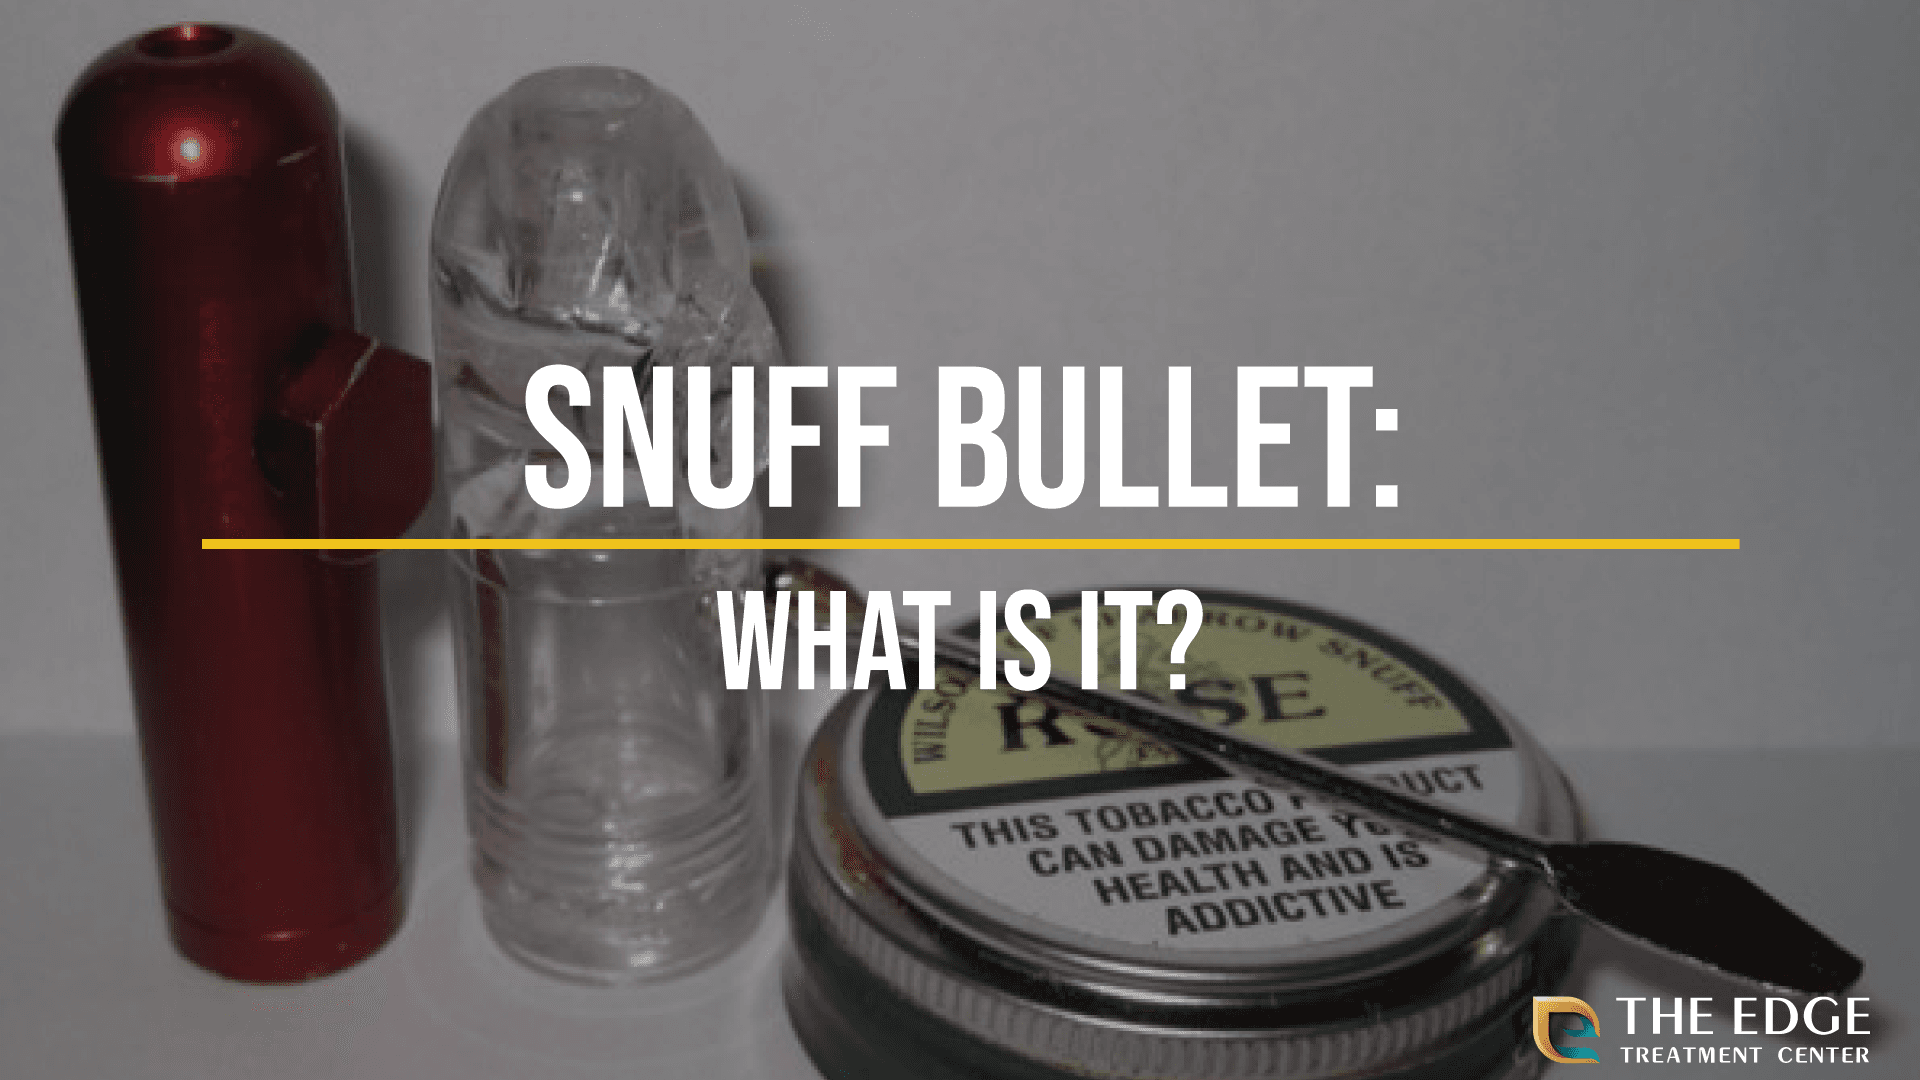 Snuff Bullet: Drug Paraphernalia and More